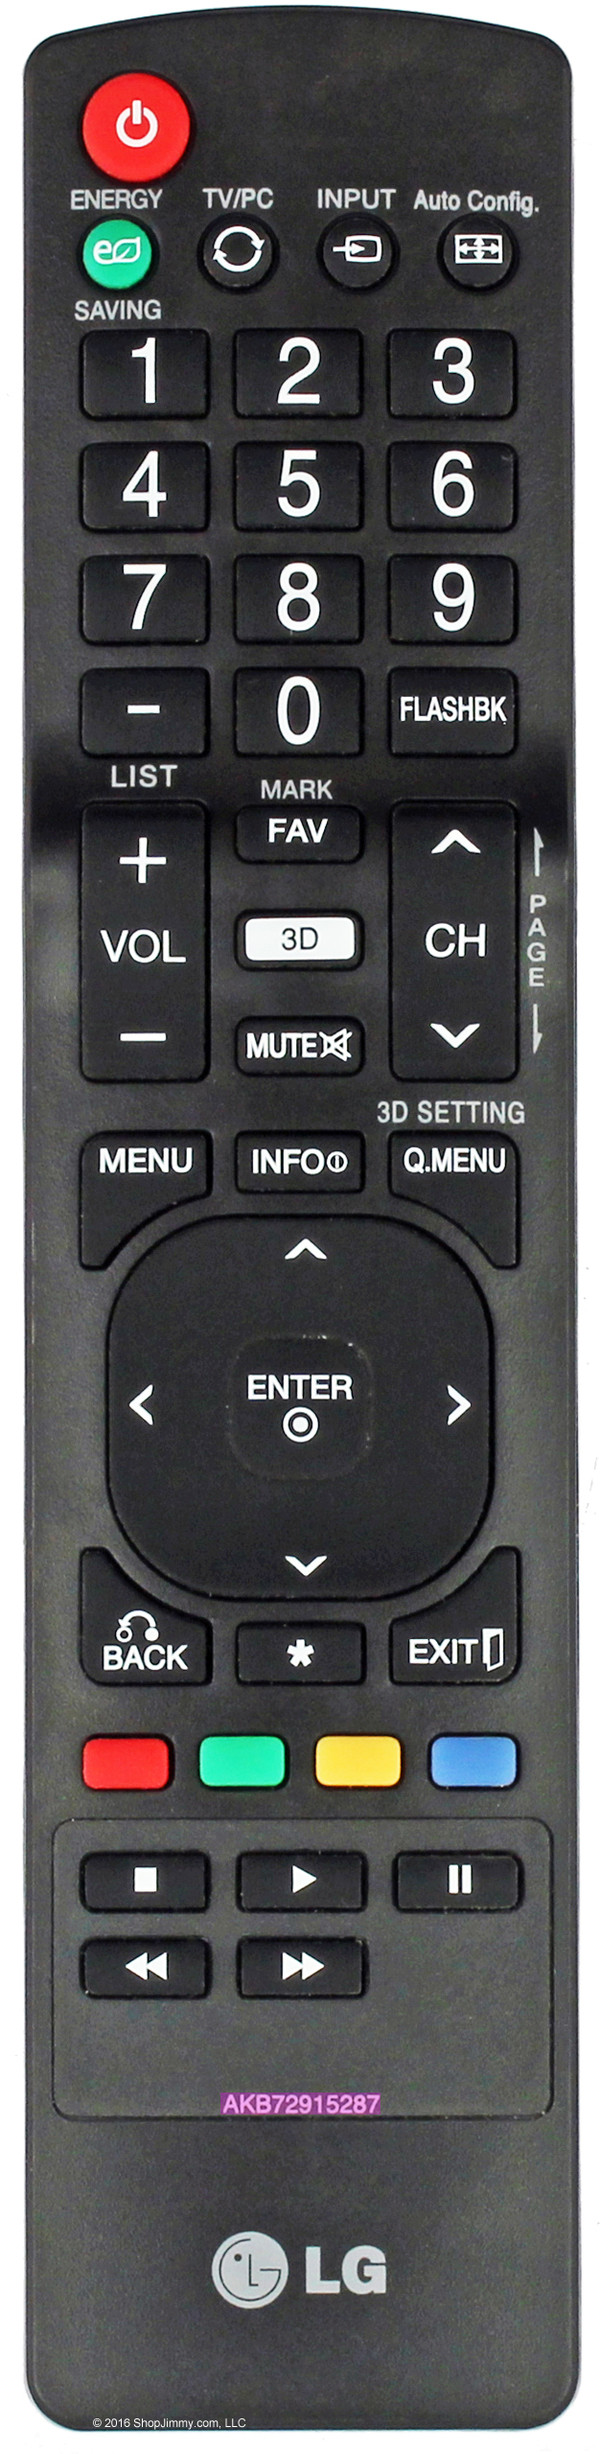 LG AKB72915287 Remote Control - Open Bag